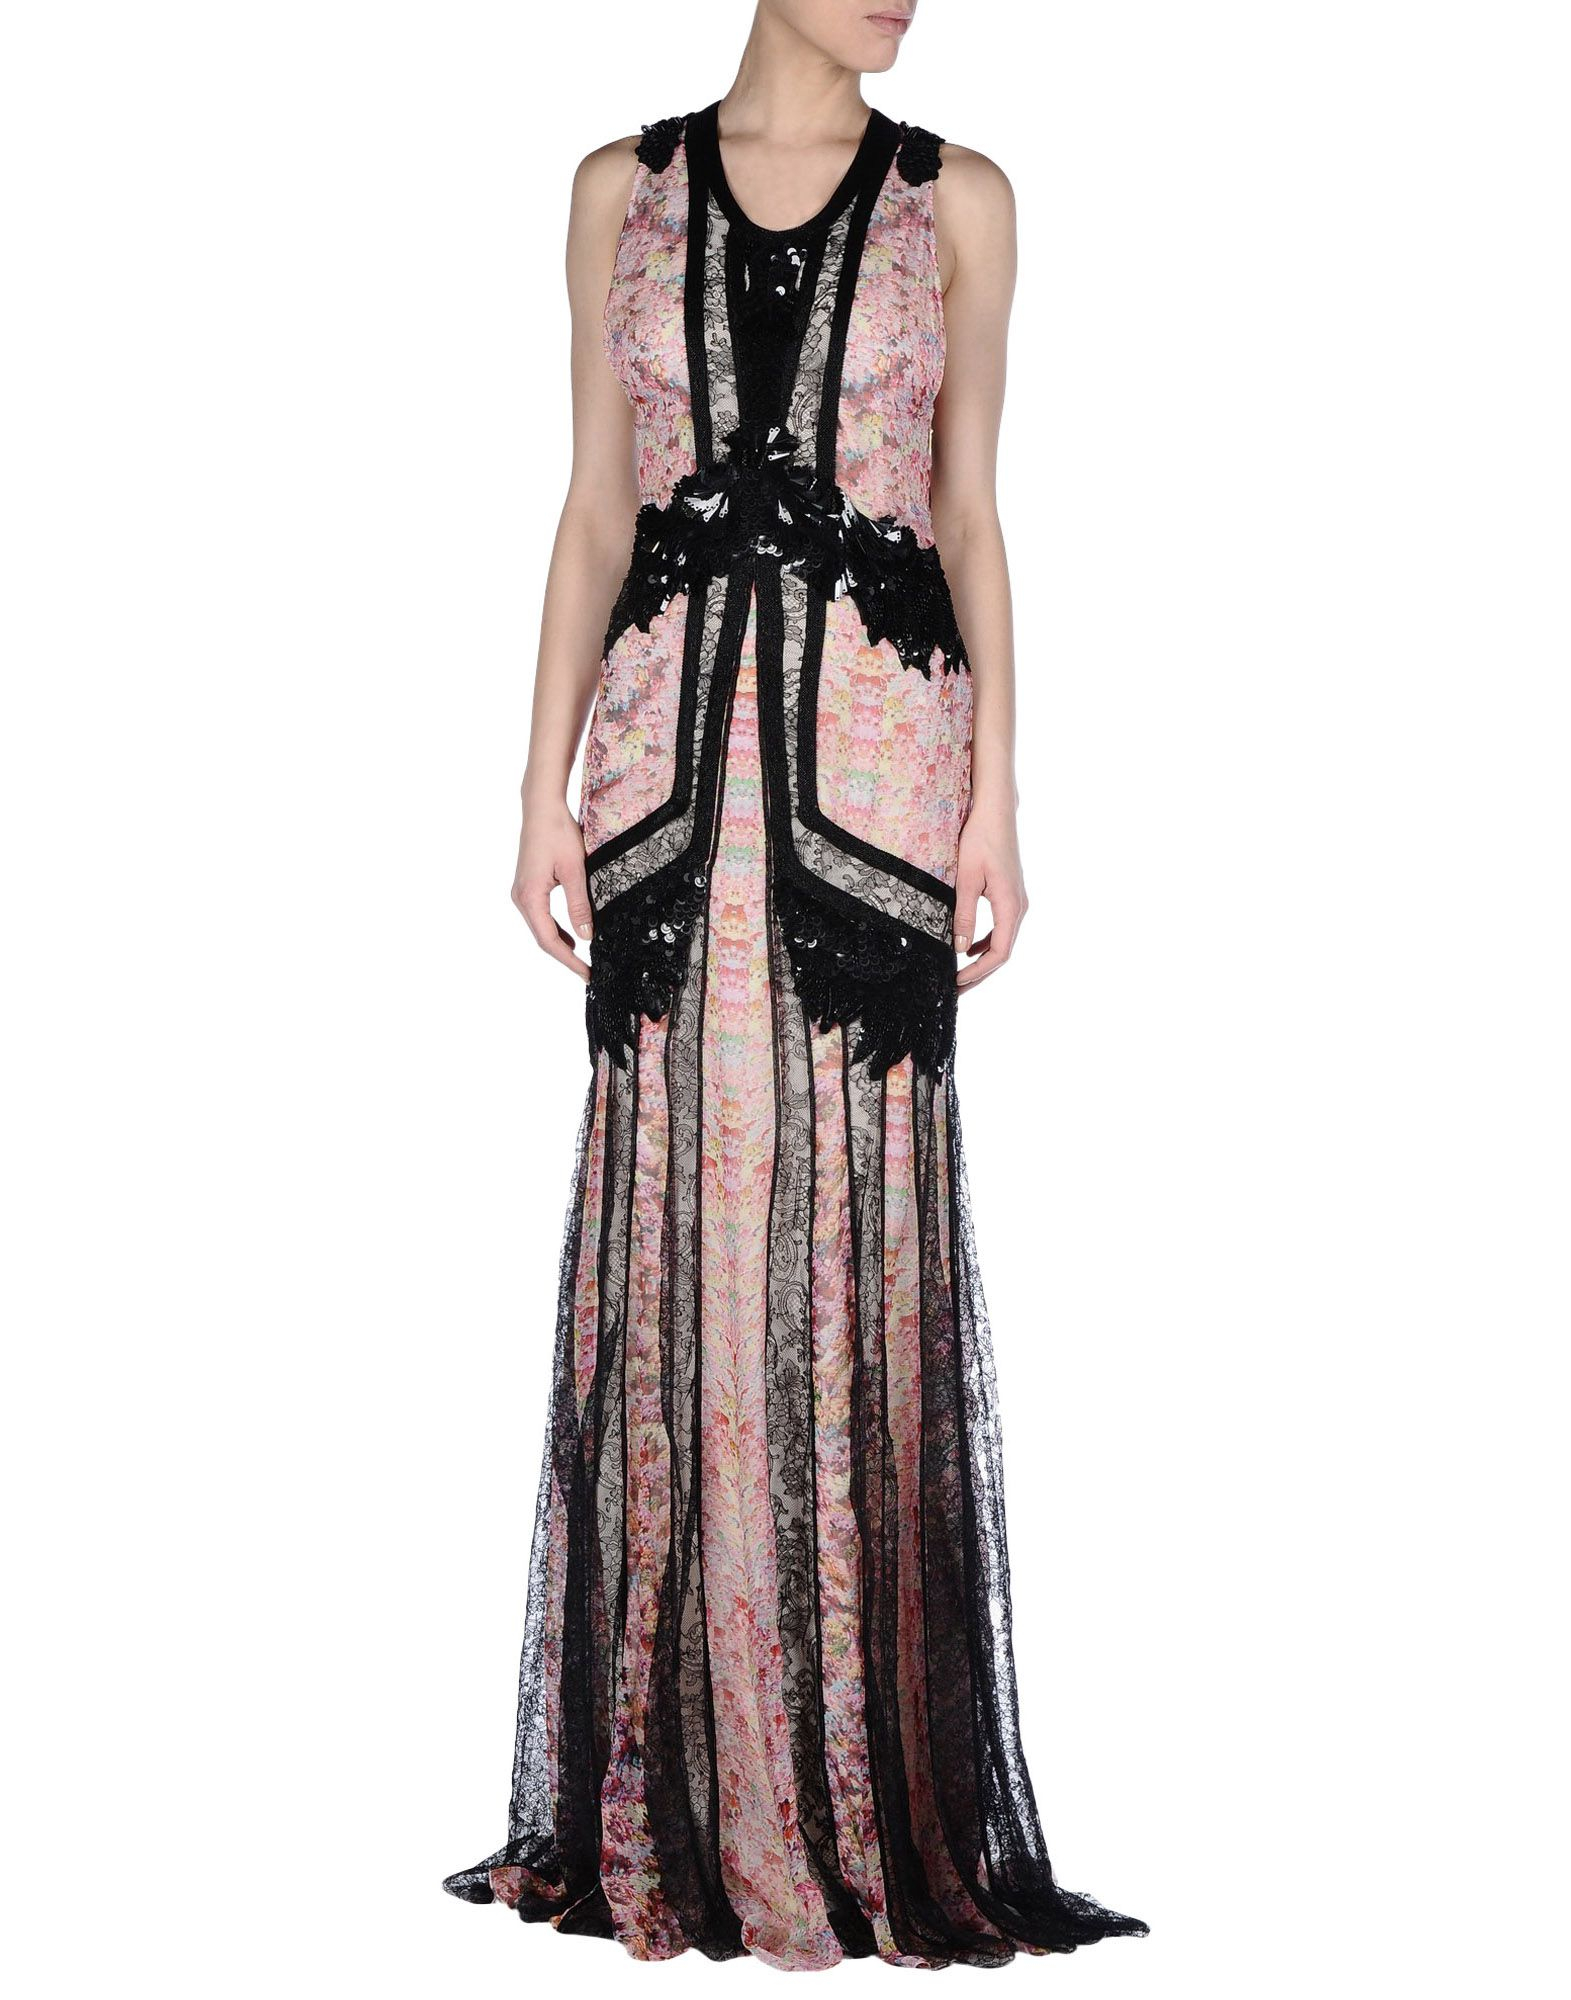 Lyst - Roberto Cavalli Long Dress in Pink